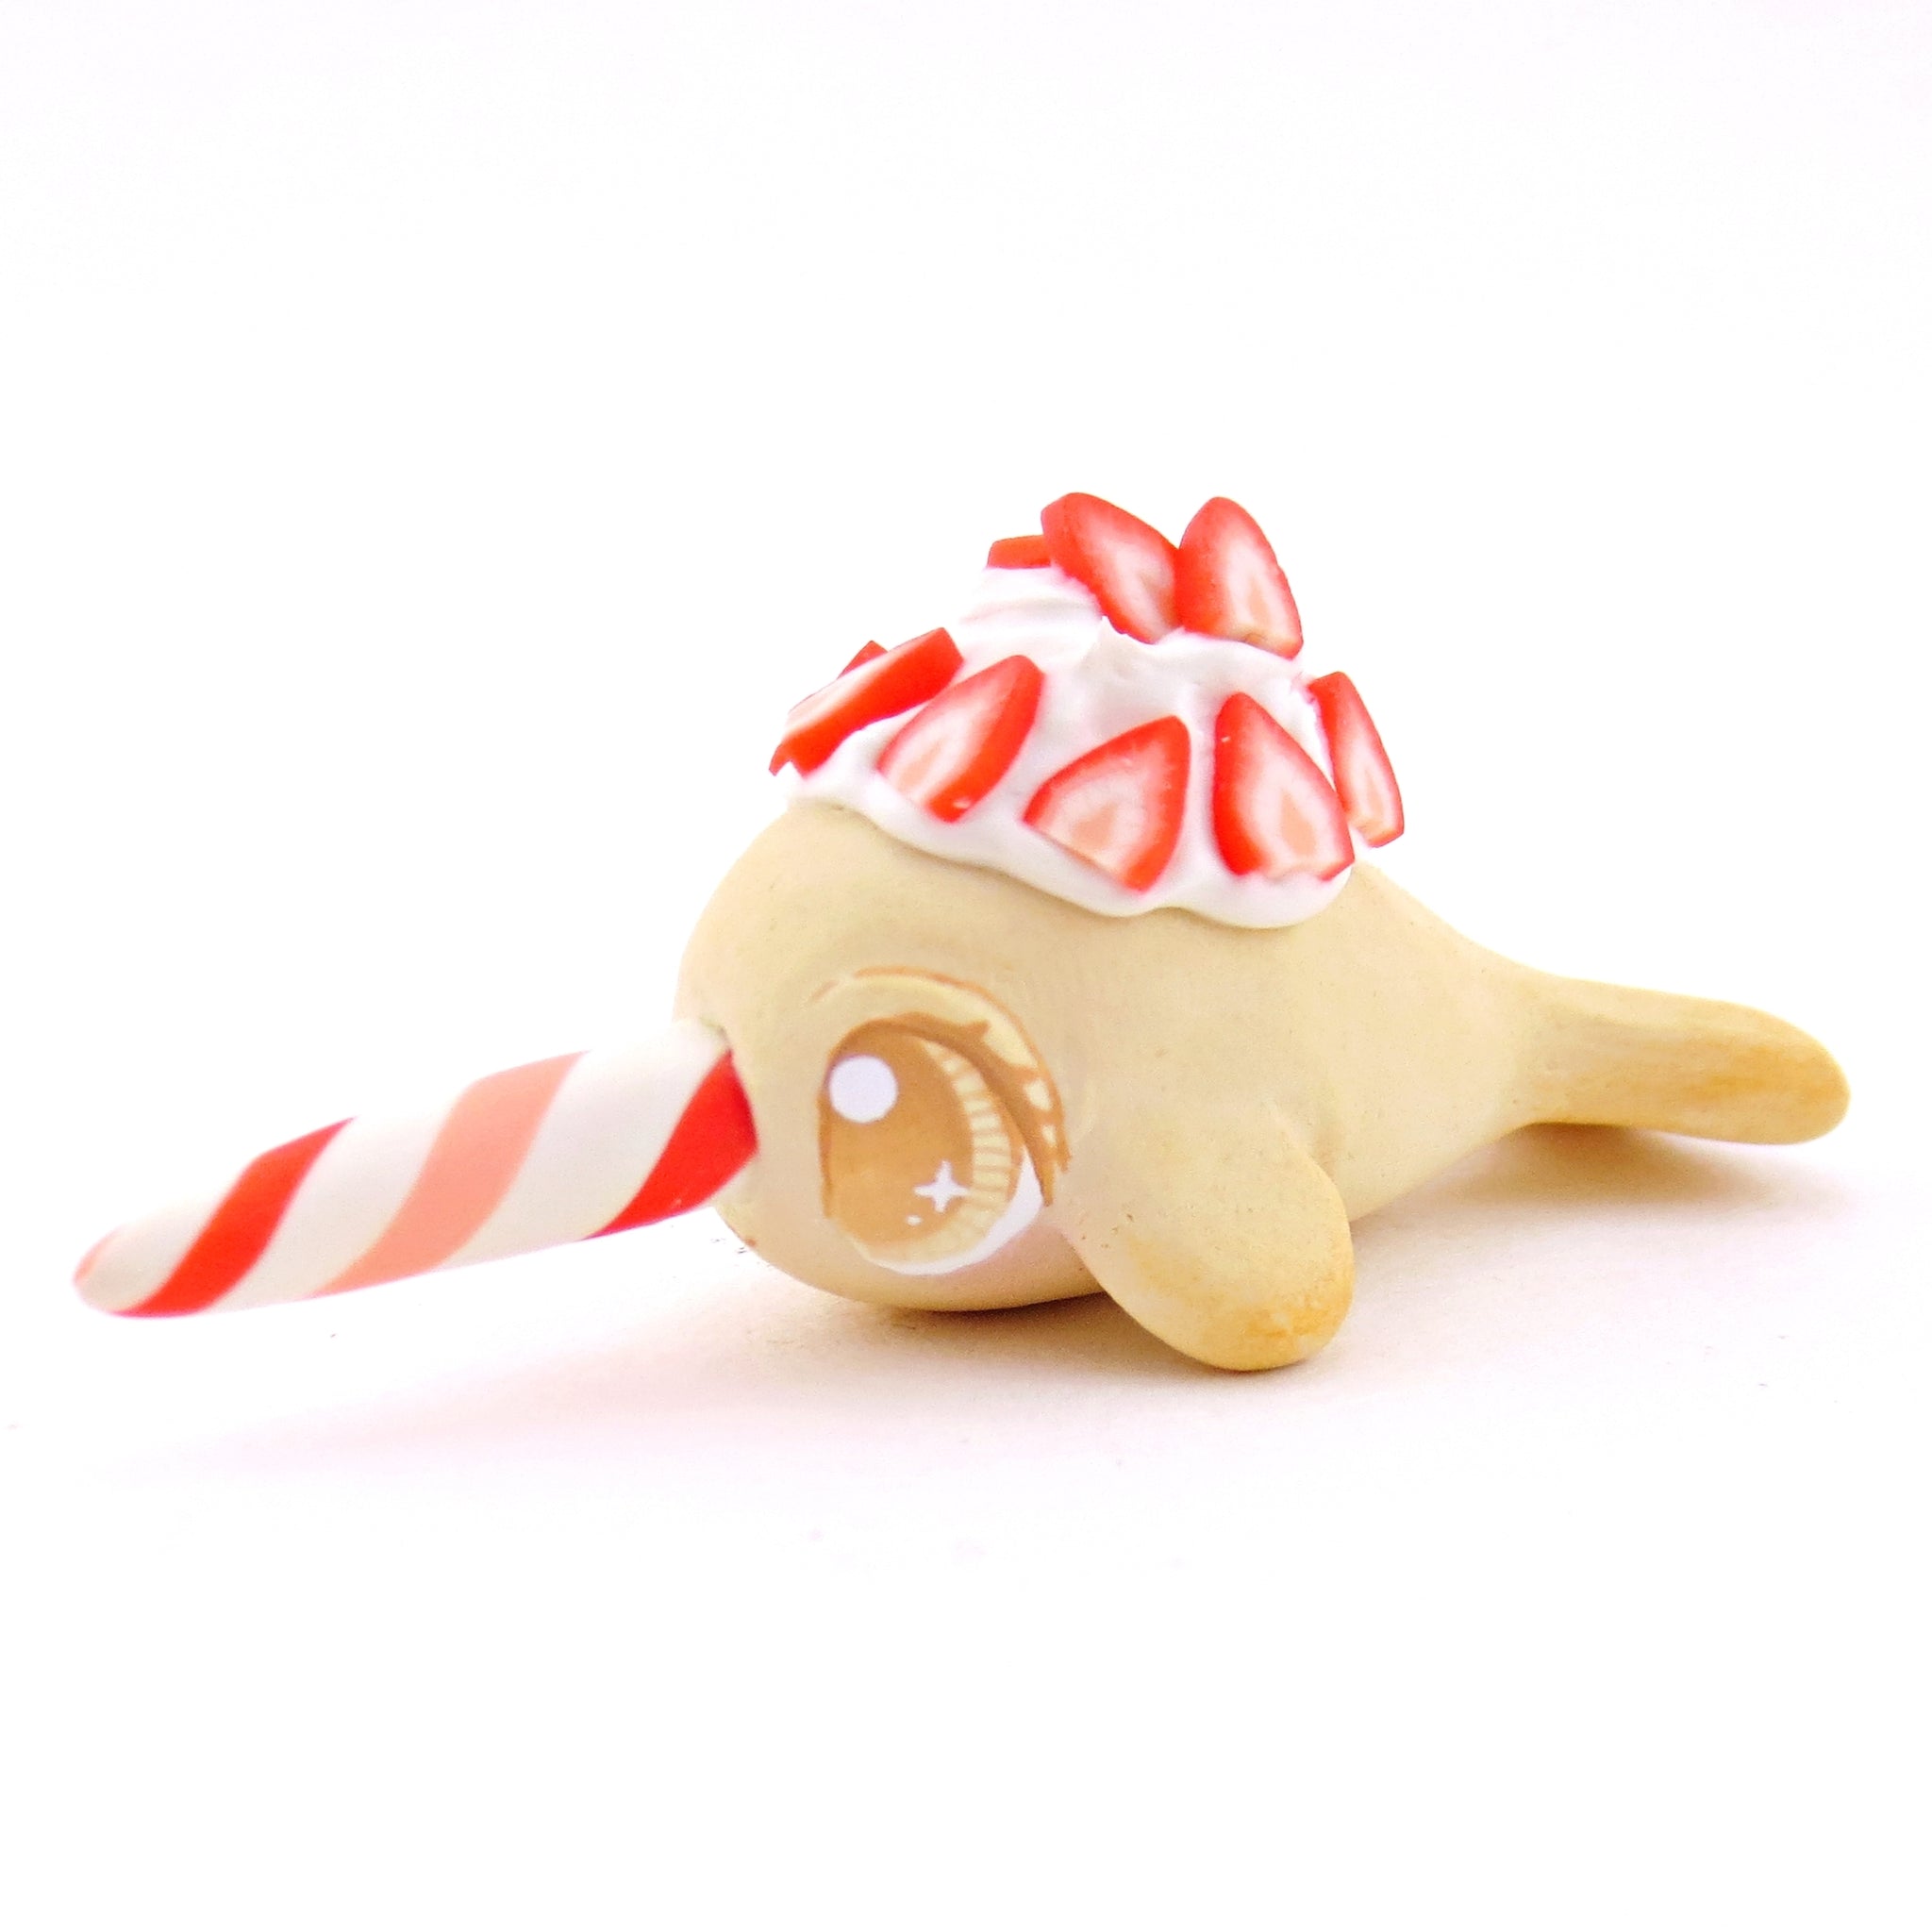 Strawberry Shortcake Narwhal Figurine - Polymer Clay Food and Dessert Animals